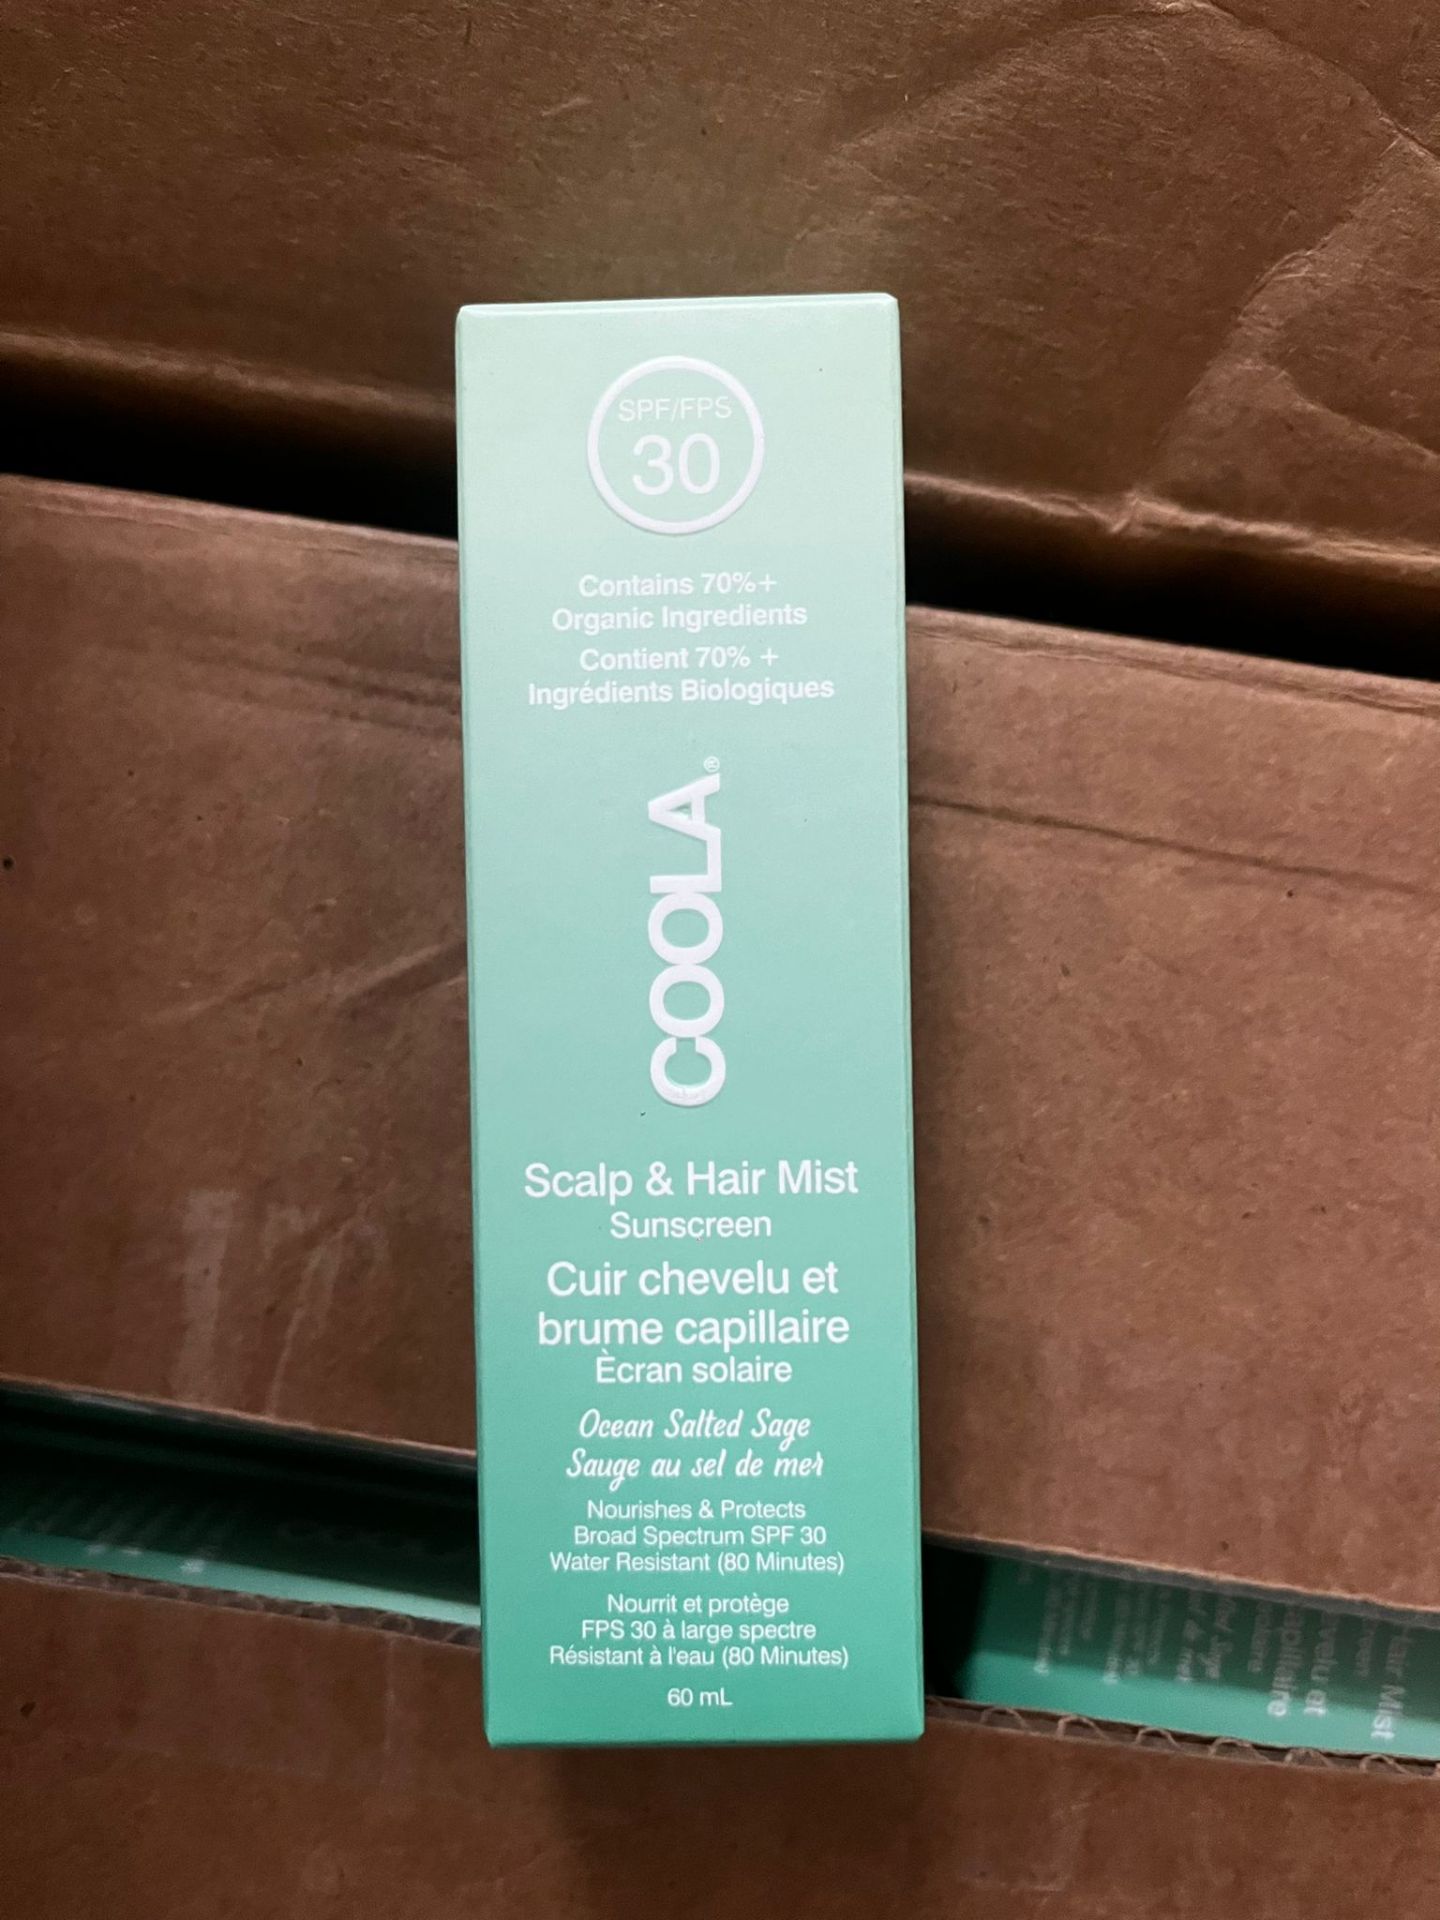 Coola Scalp & Hair Mist Sunscreen x 108, Est Retail Value £3100